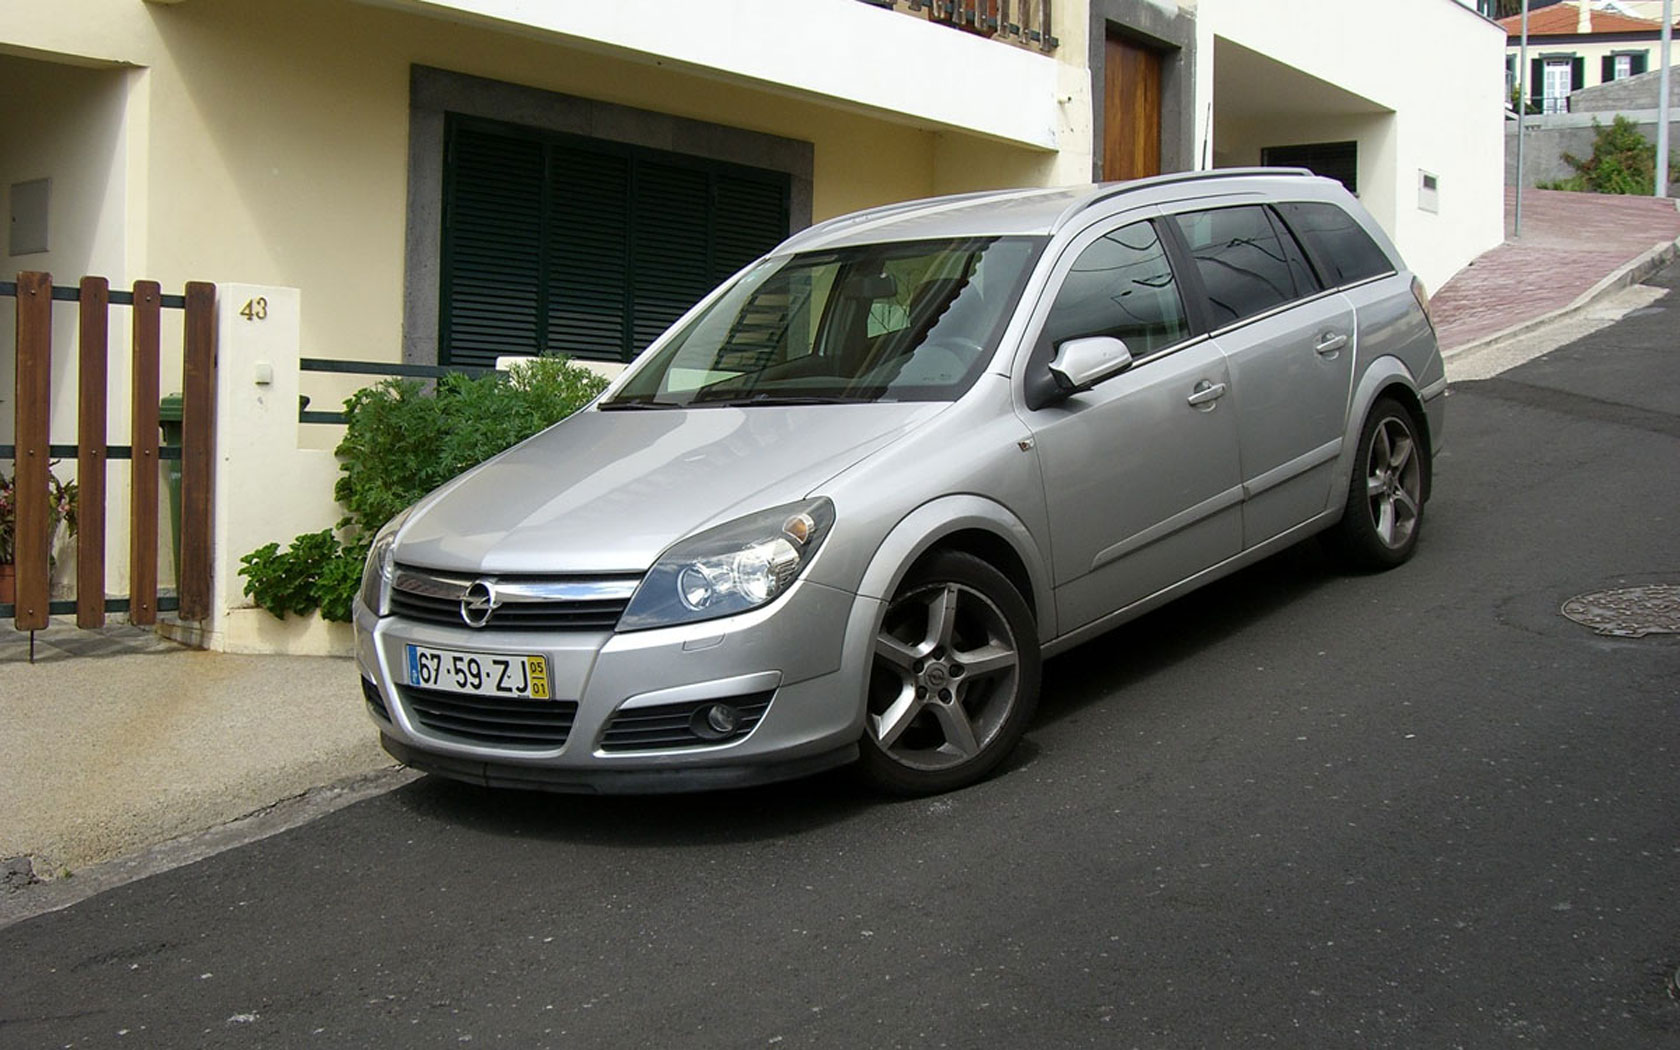  Opel Astra Caravan (2005-2015)